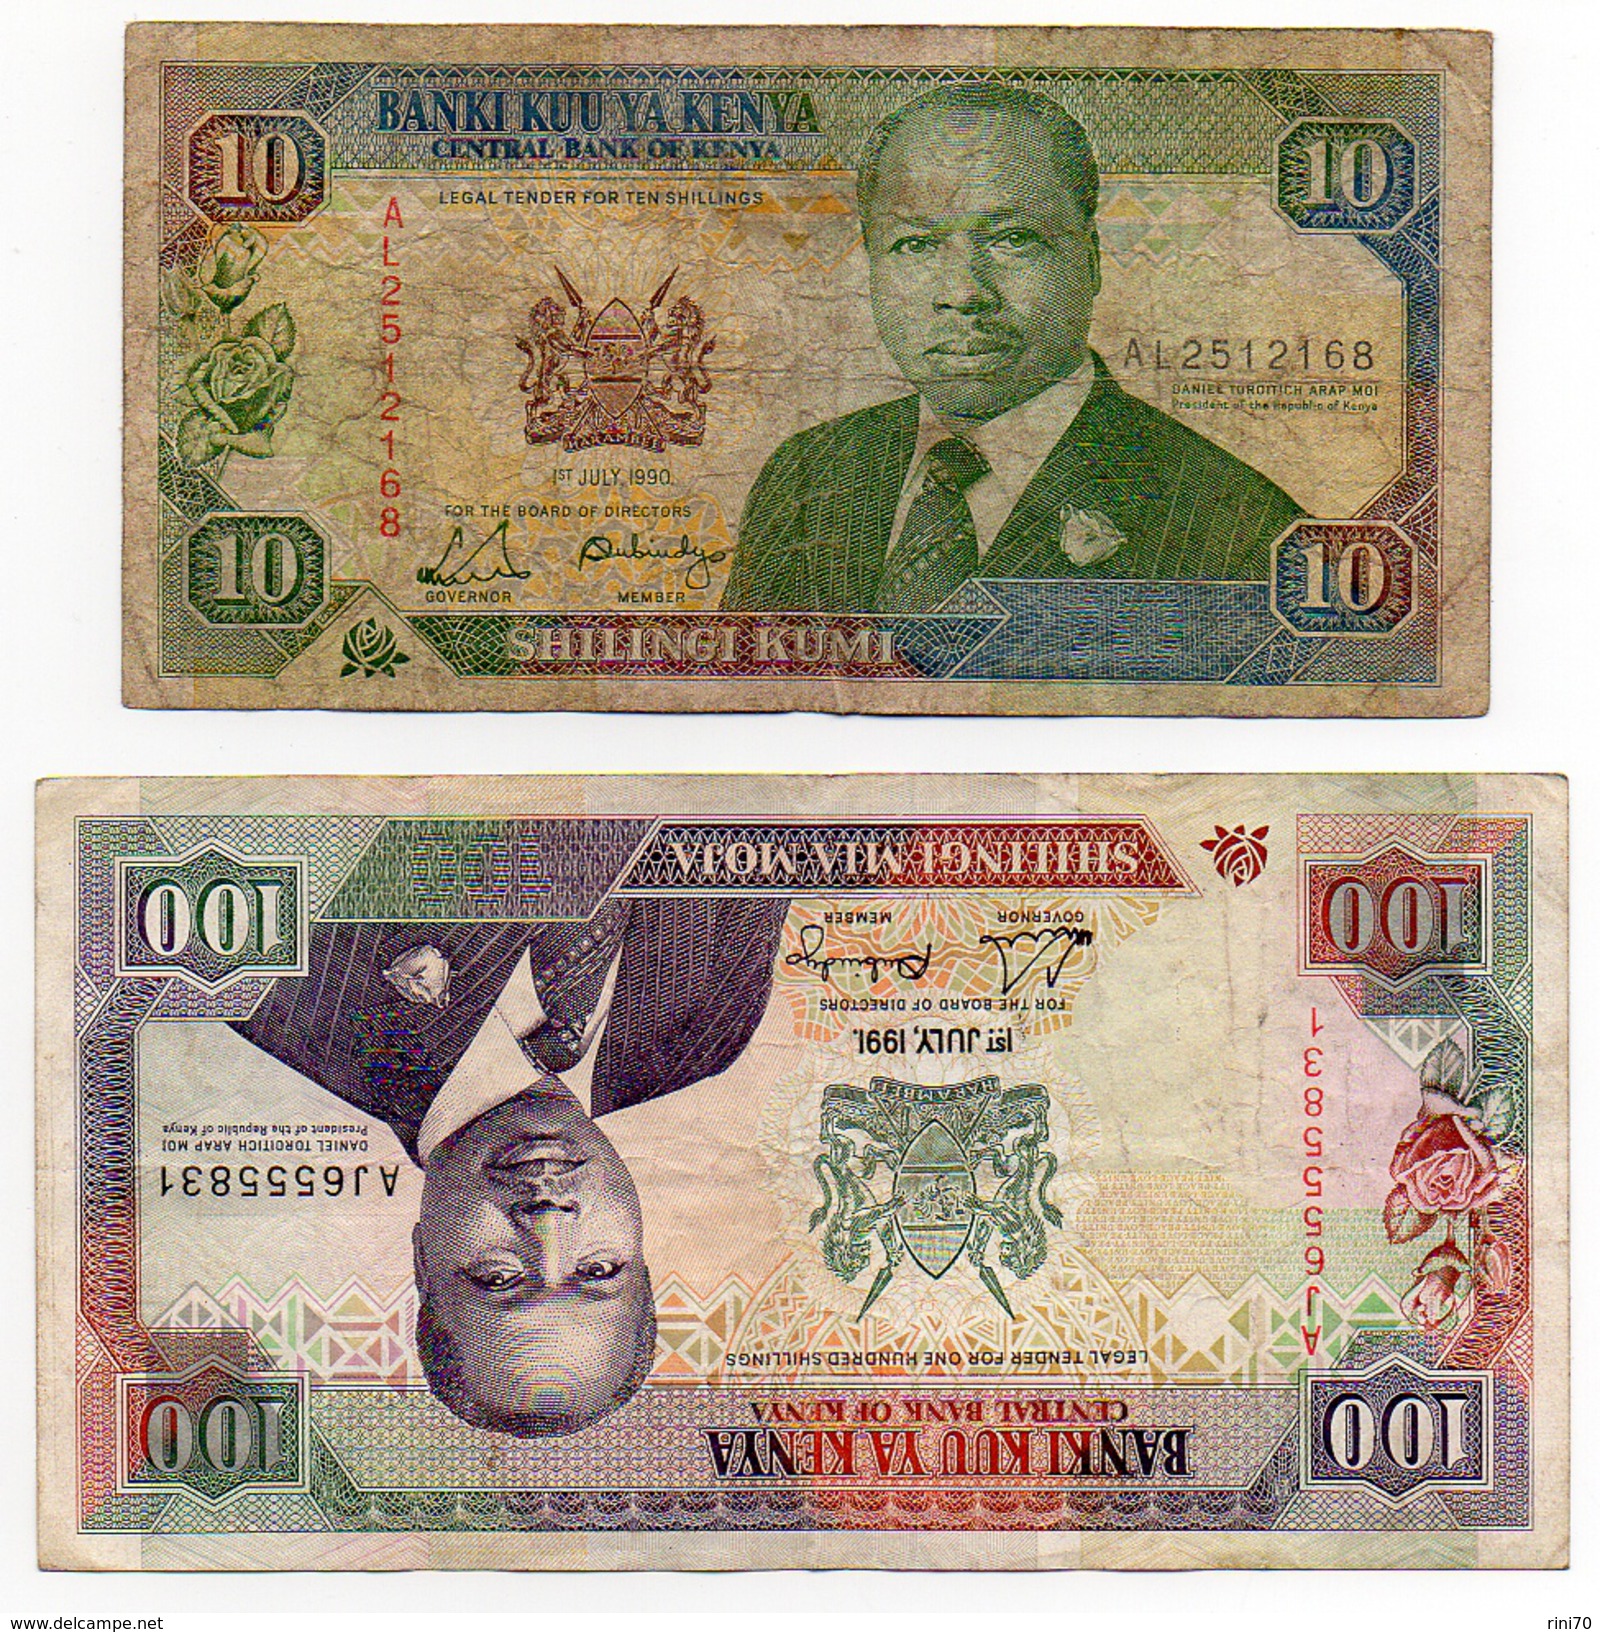 2 Banconote Kenya 100 One Hundred Shilingi Mia Moja Serie AJ 1991 E10 Shilingi Kumi Serie AL 1990 - Kenia